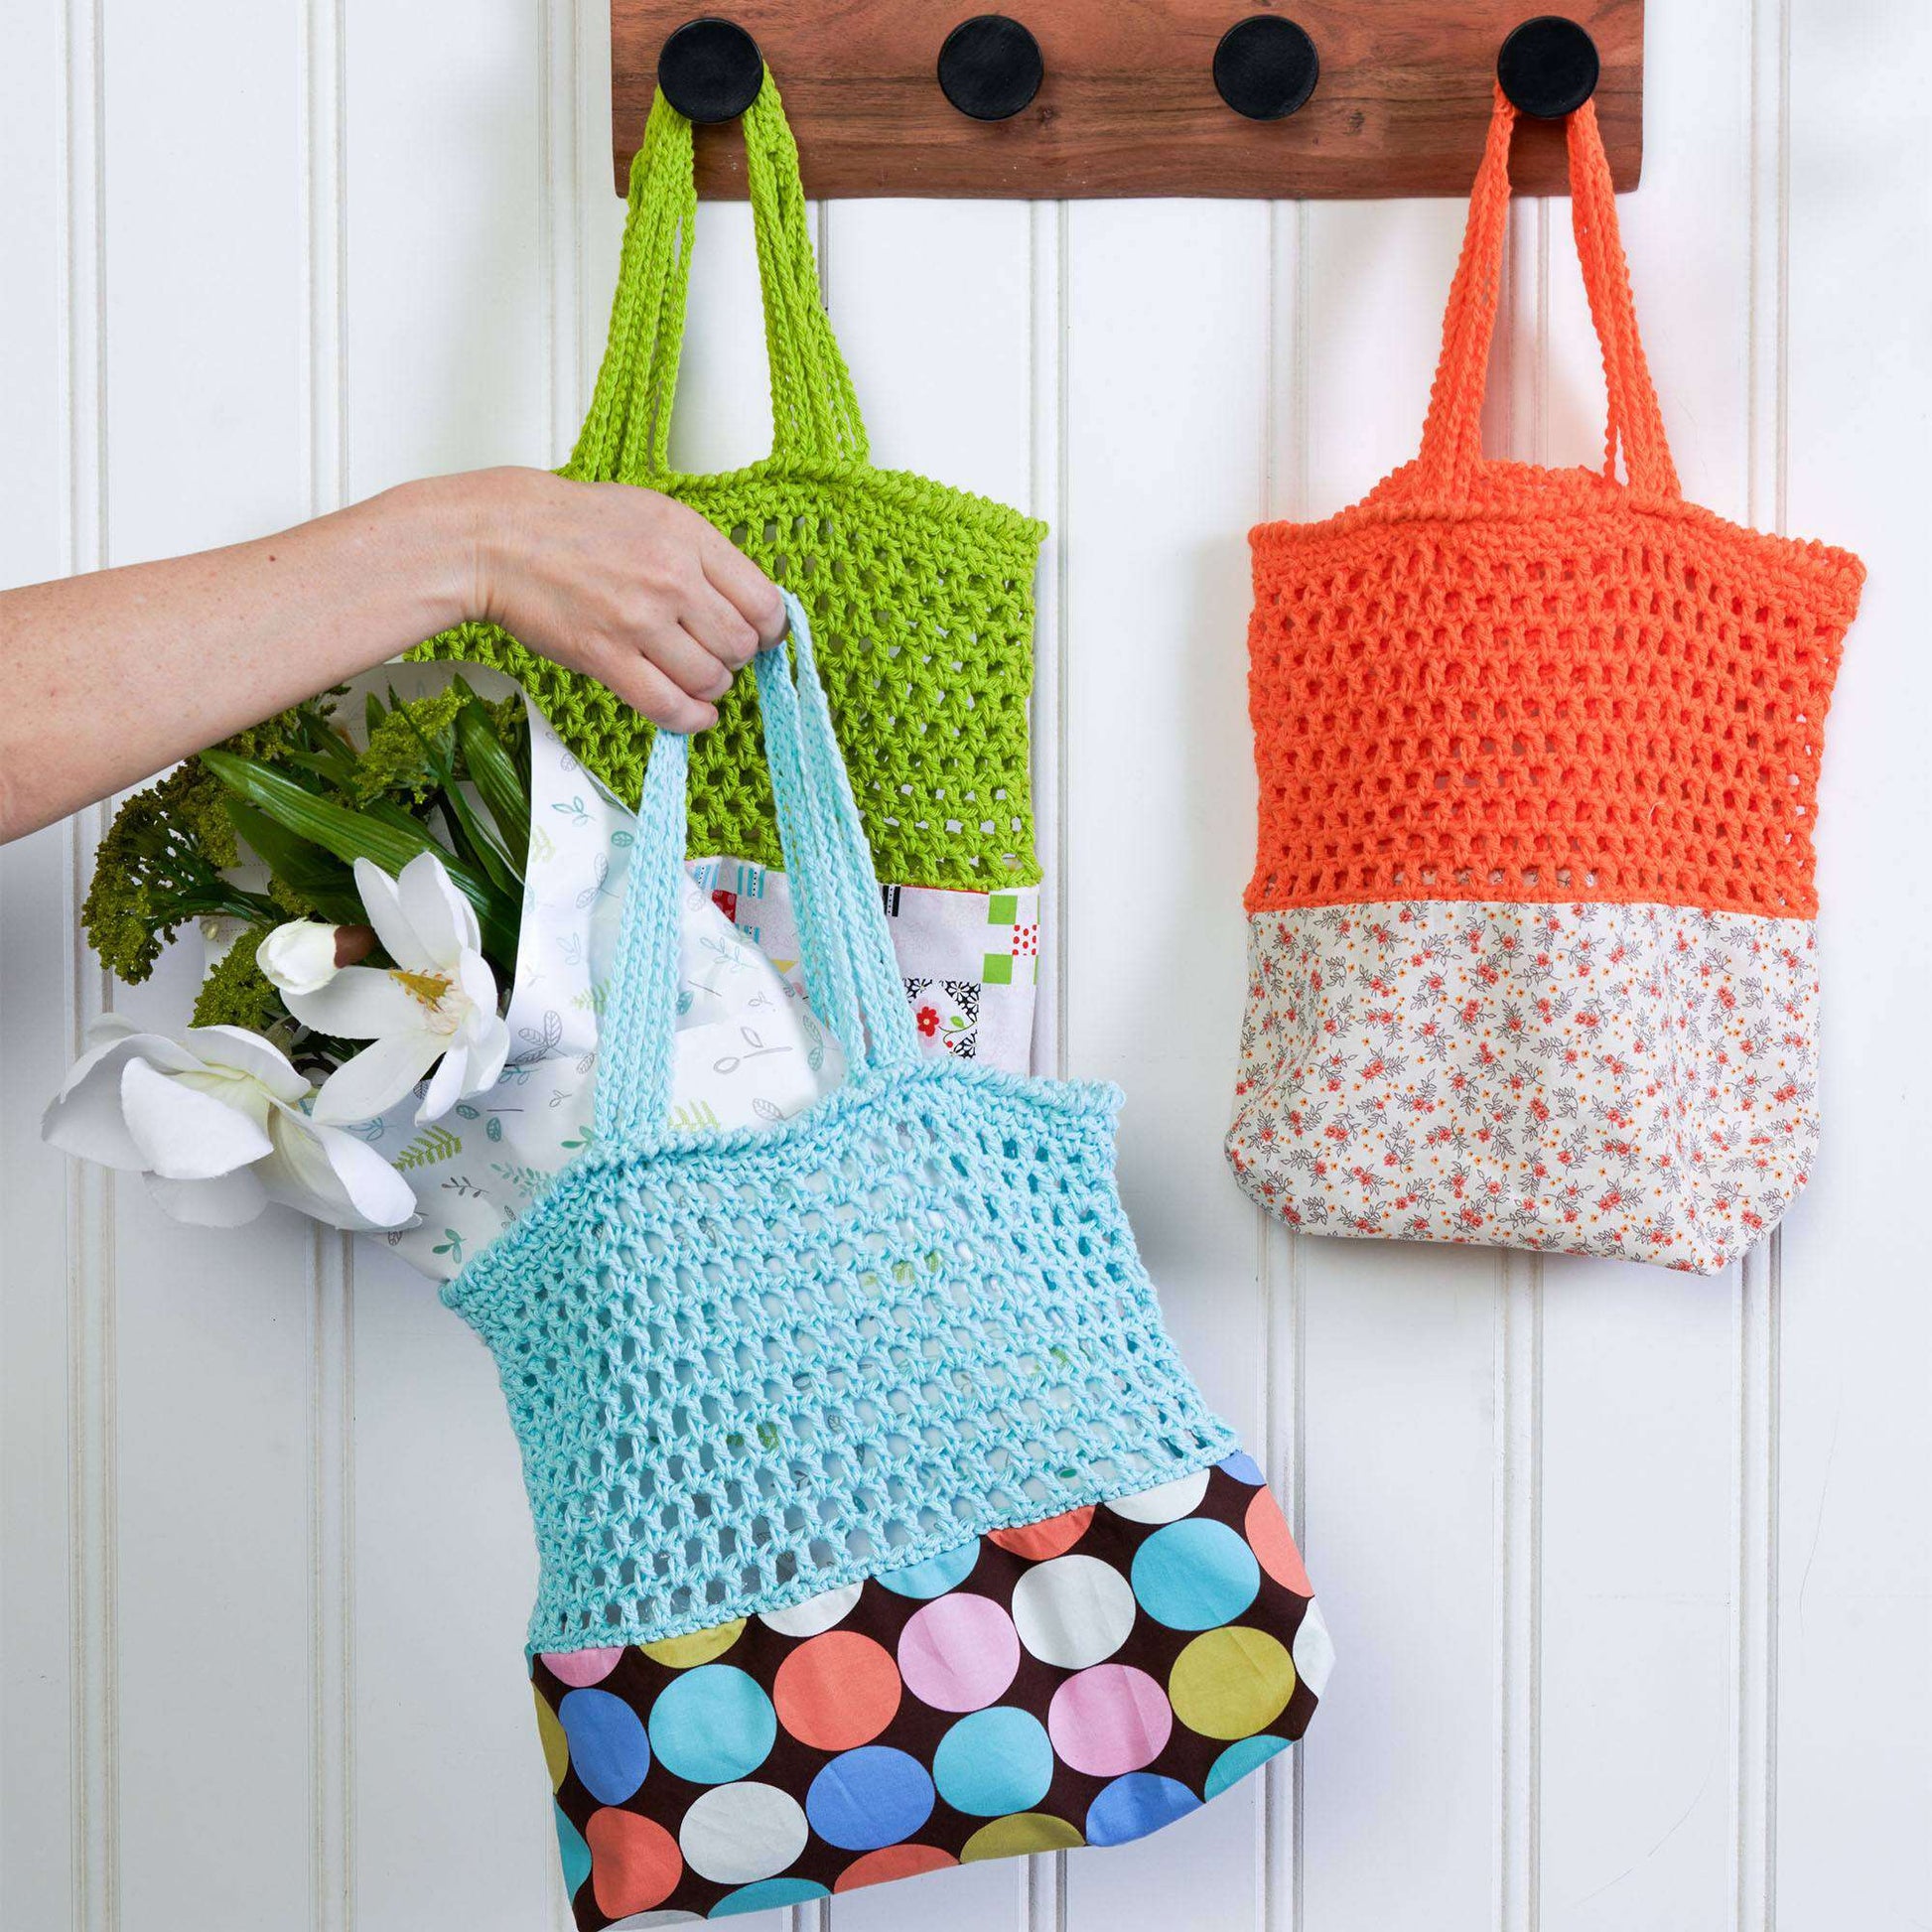 Crochet Shopping Bag - Sew Crafty Crochet